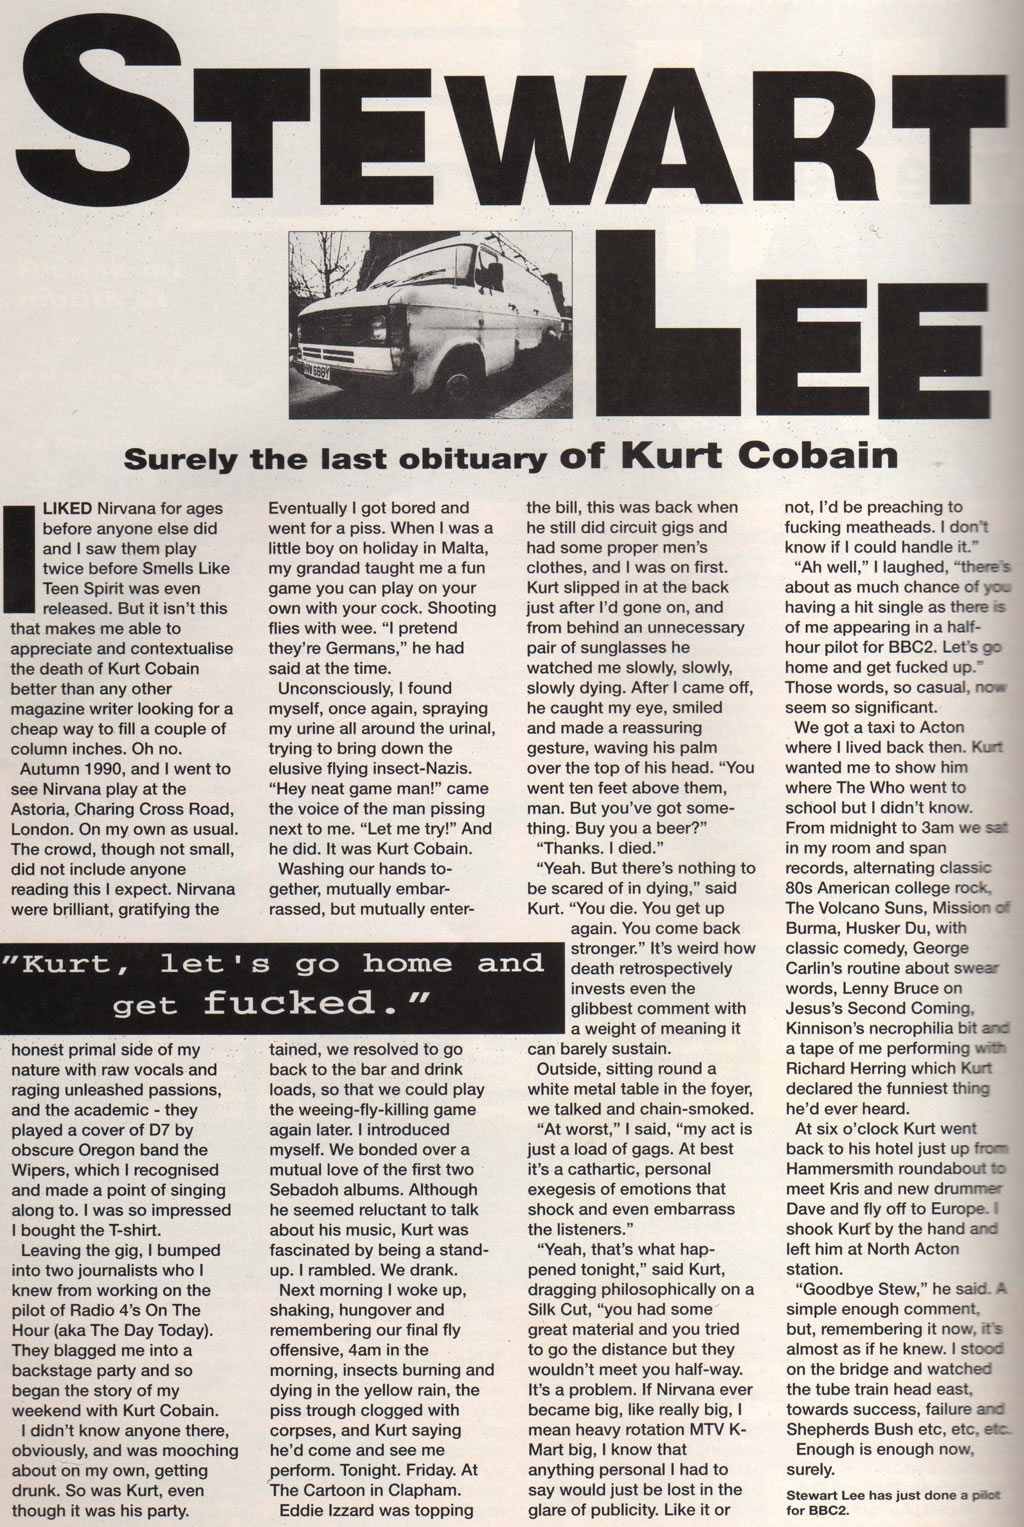 Surely the last obituary of Kurt Cobain